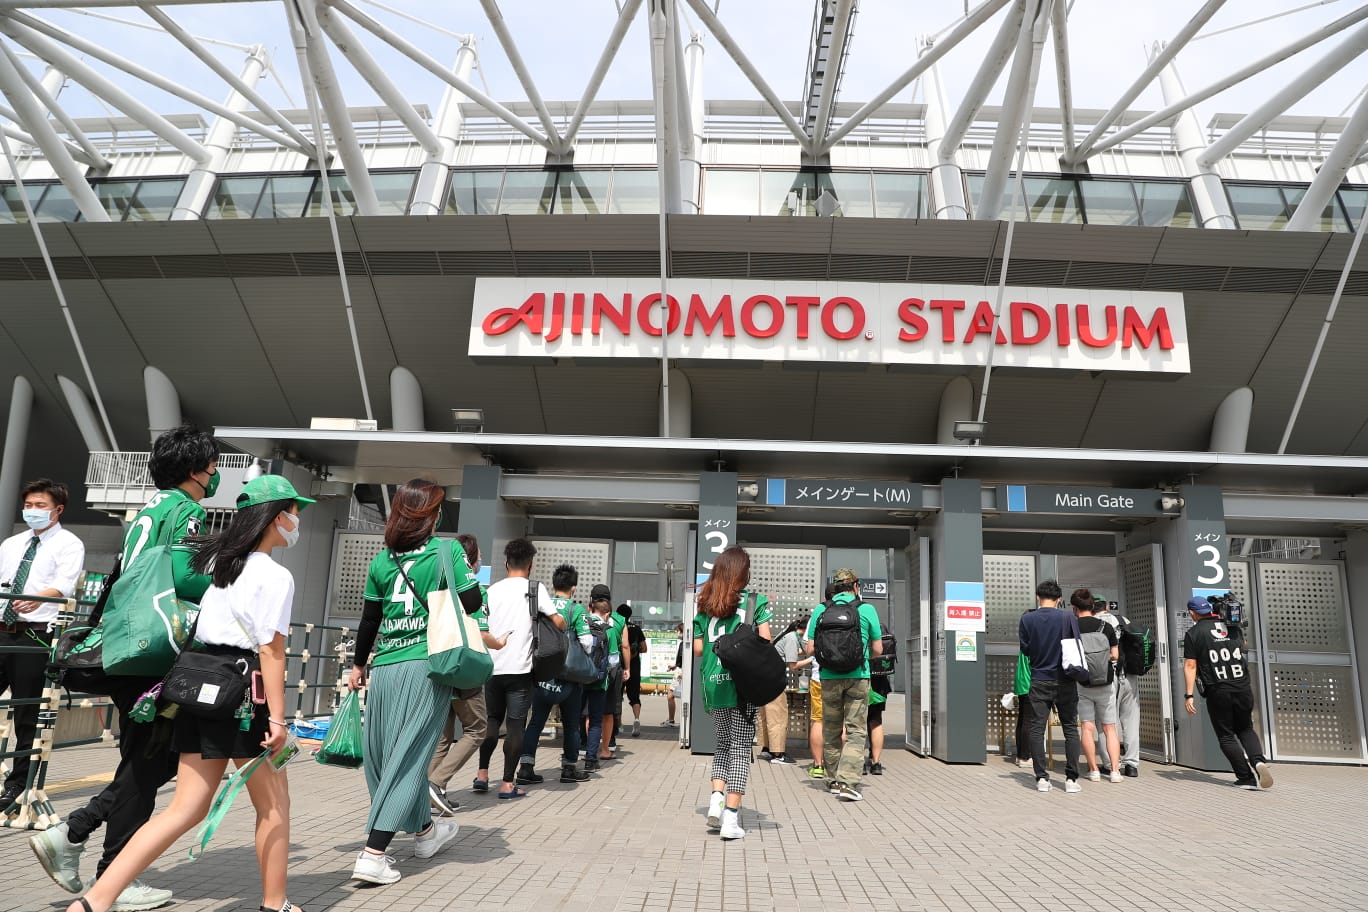 Siap Pesta di Ajinomoto Stadium! 3 Kondisi Albirex Niigata Juara J2 League 2022